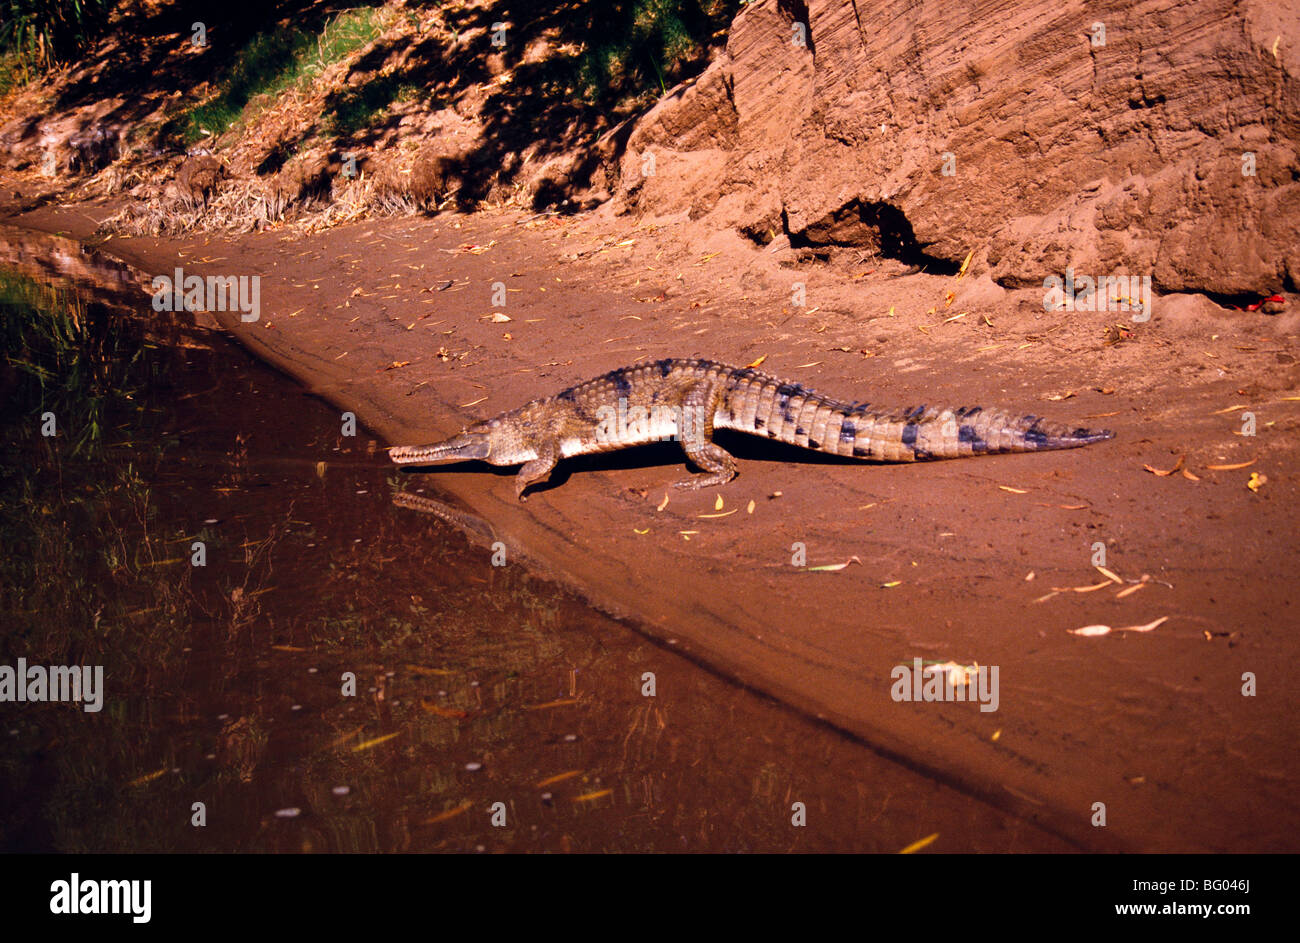 Freshwater crocodile, Australia Stock Photo